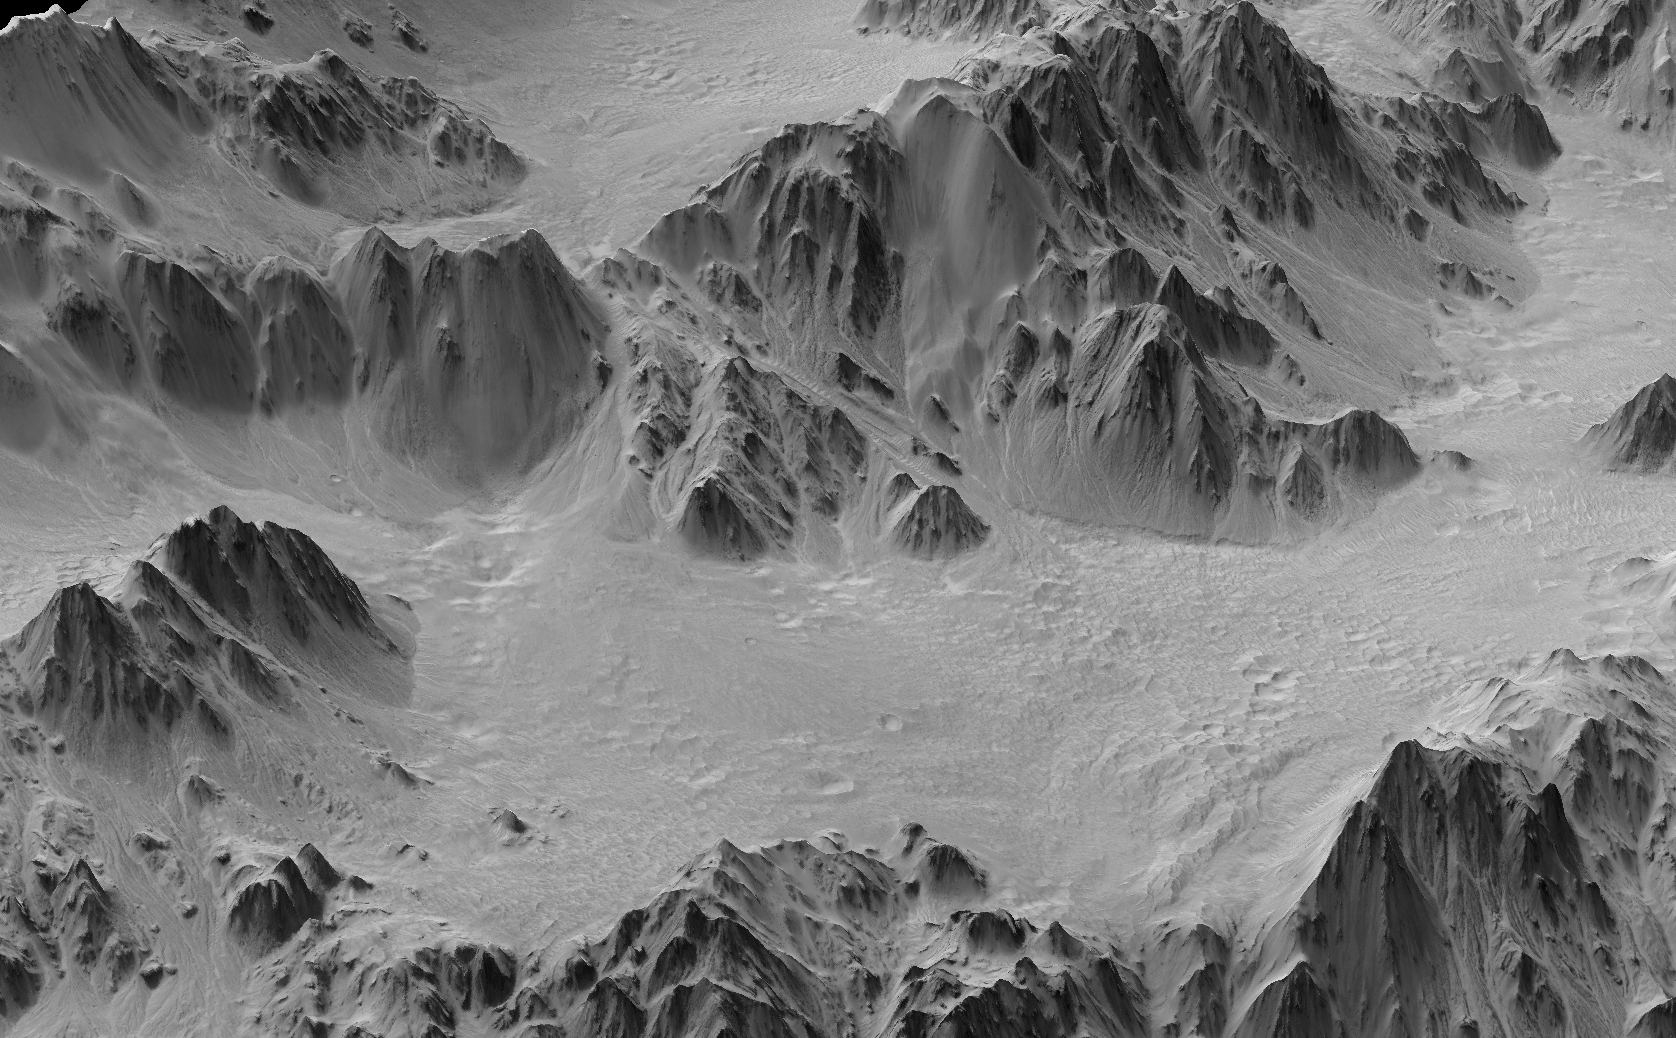 Terrain Model of Mars' Mojave Crater